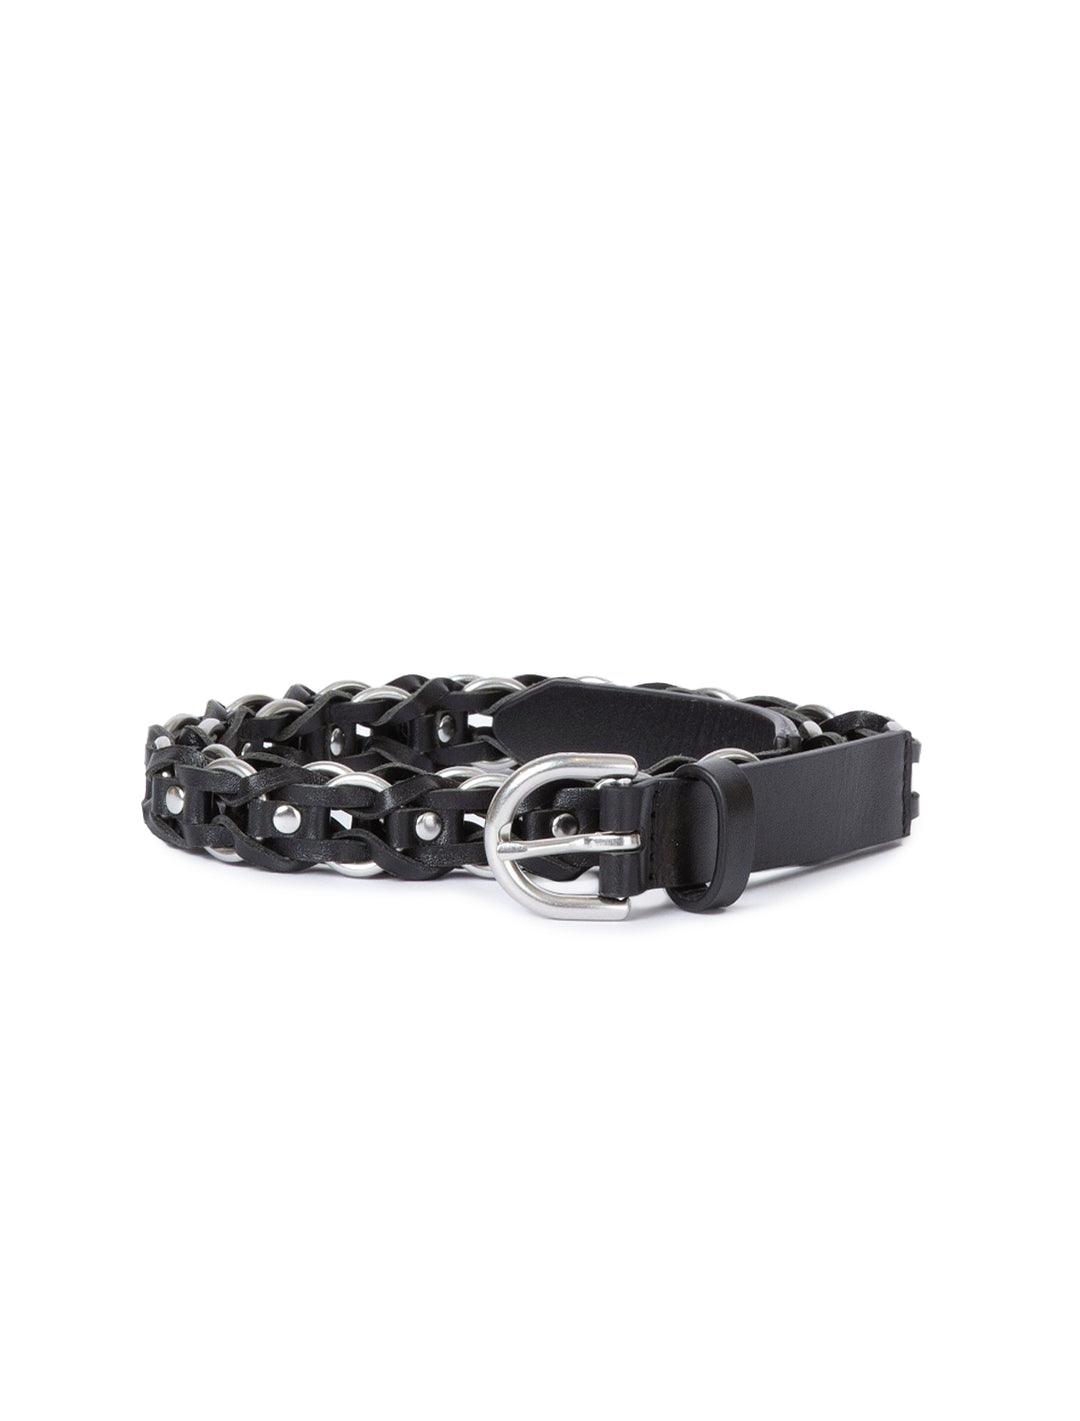 Front view of Rag & Bone's aria chain belt in black.